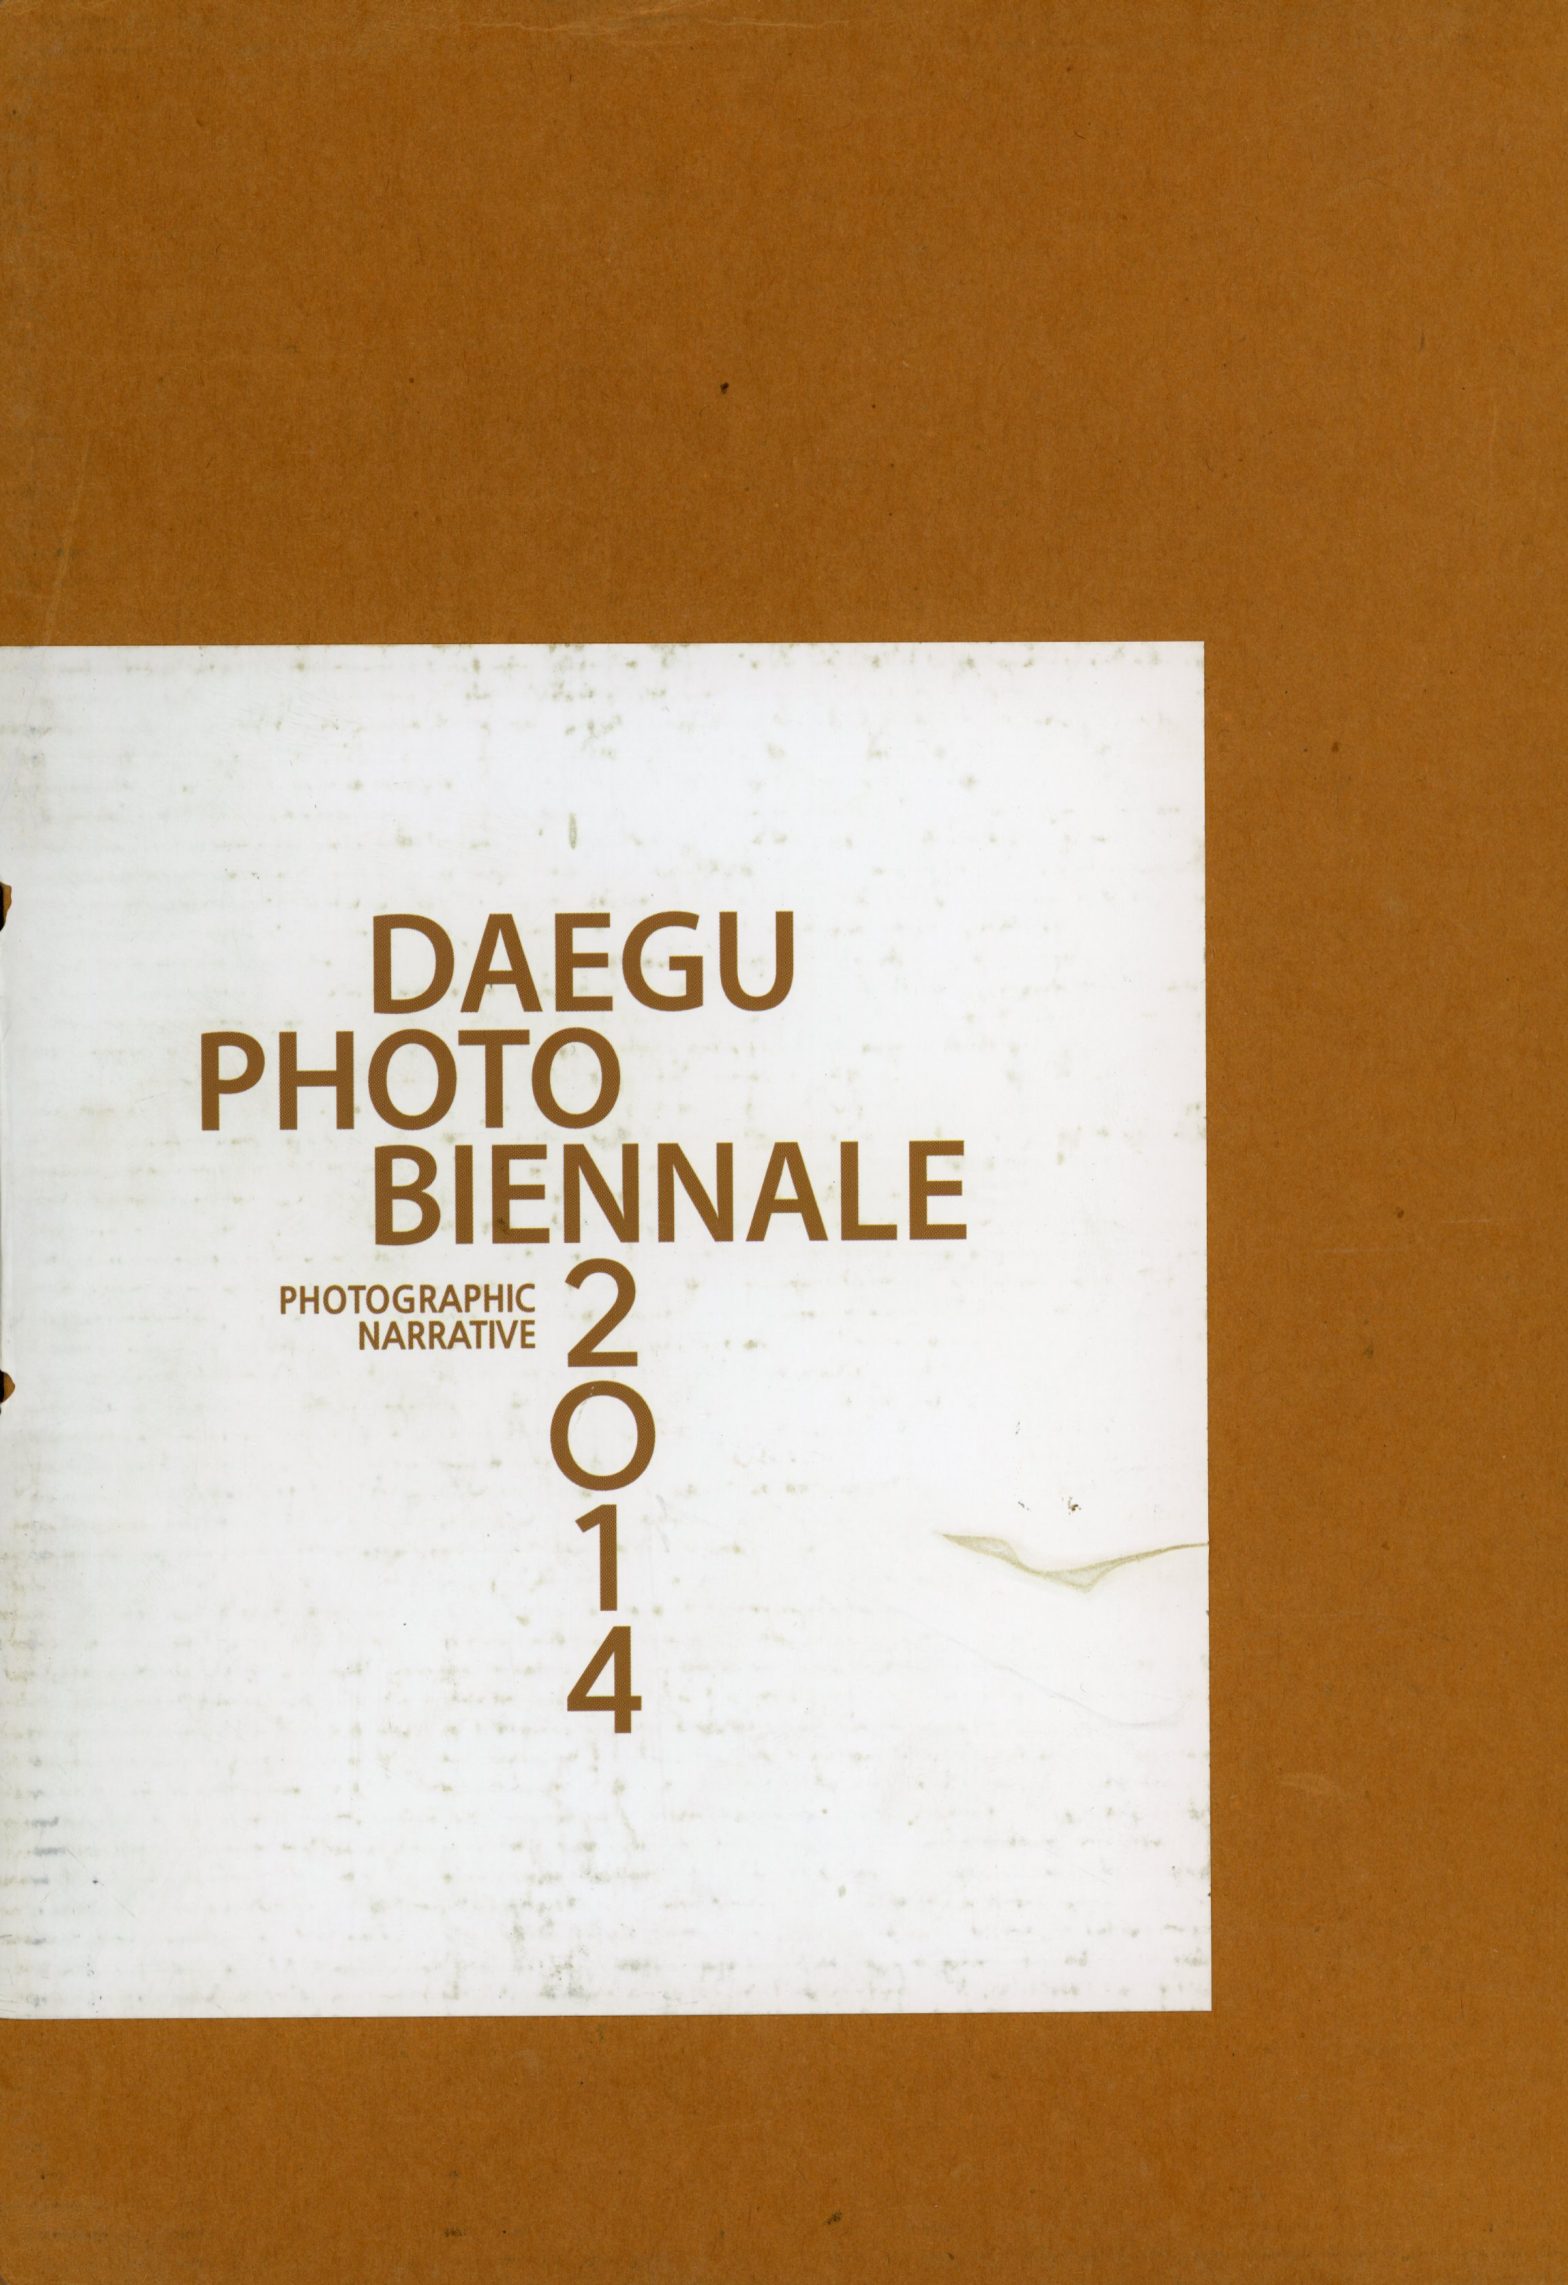 Photographic Narrative Daegu Photo Biennale 2014